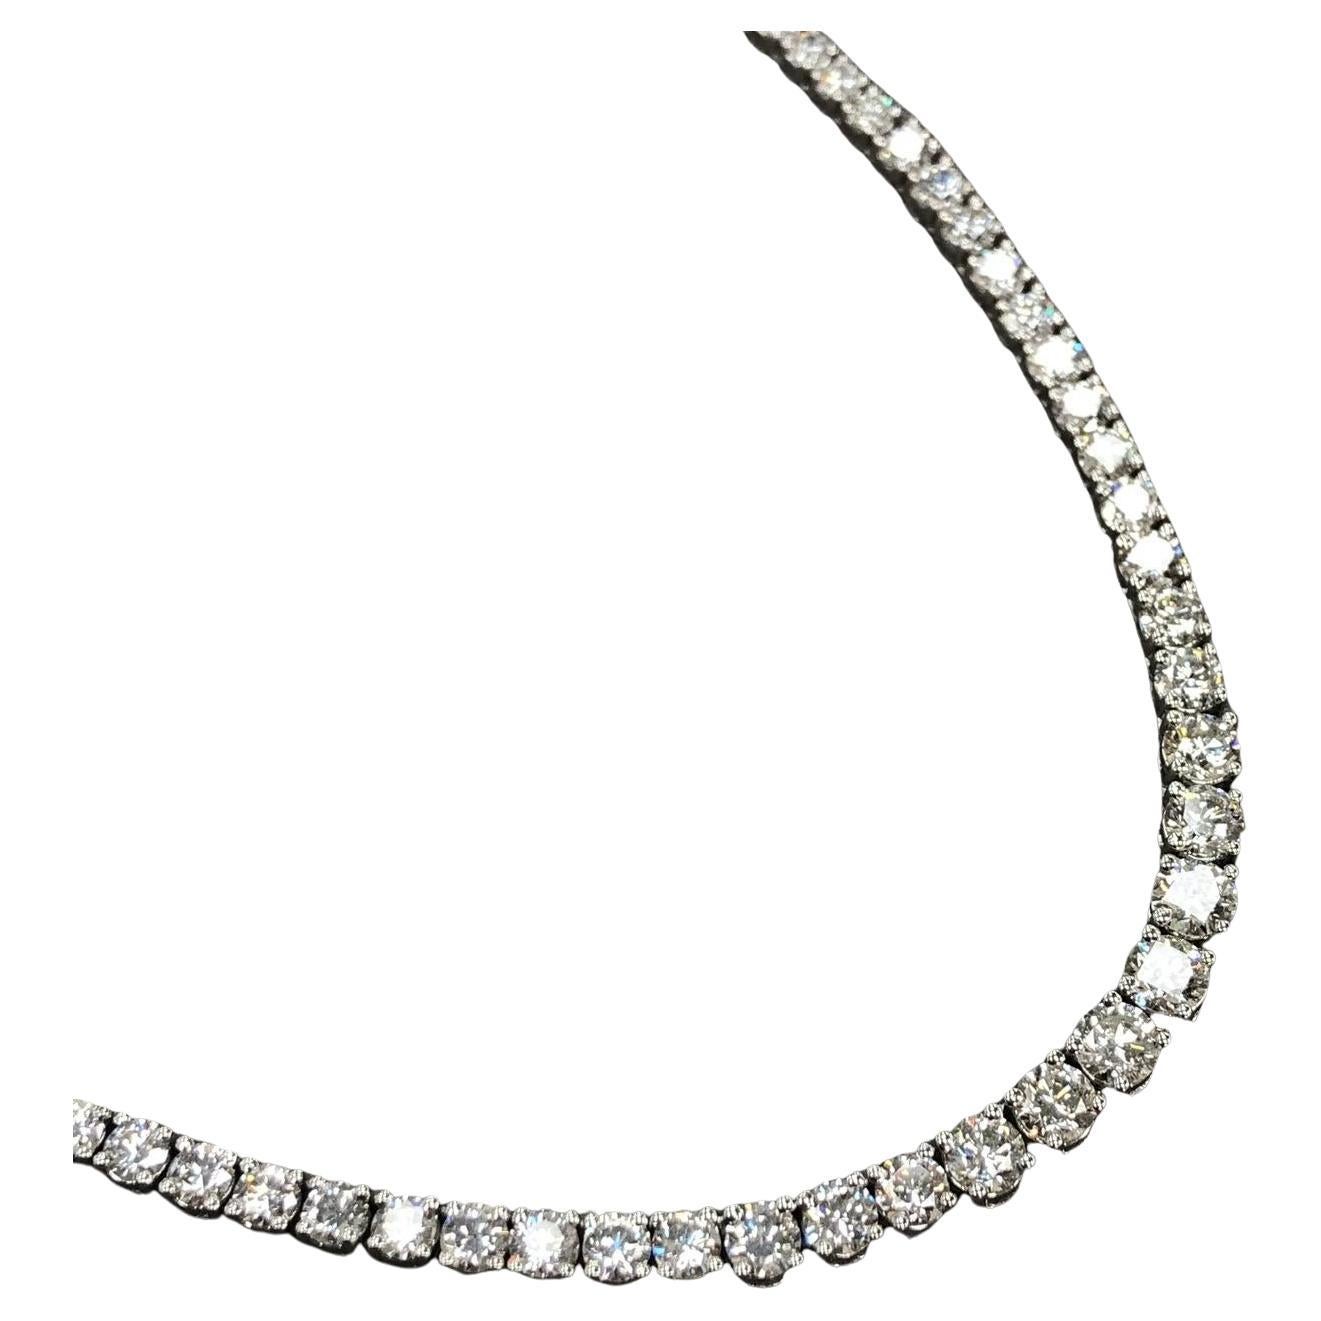 28 Carat Round Brilliant Cut Diamond Tennis Necklace Set in 18K White Gold